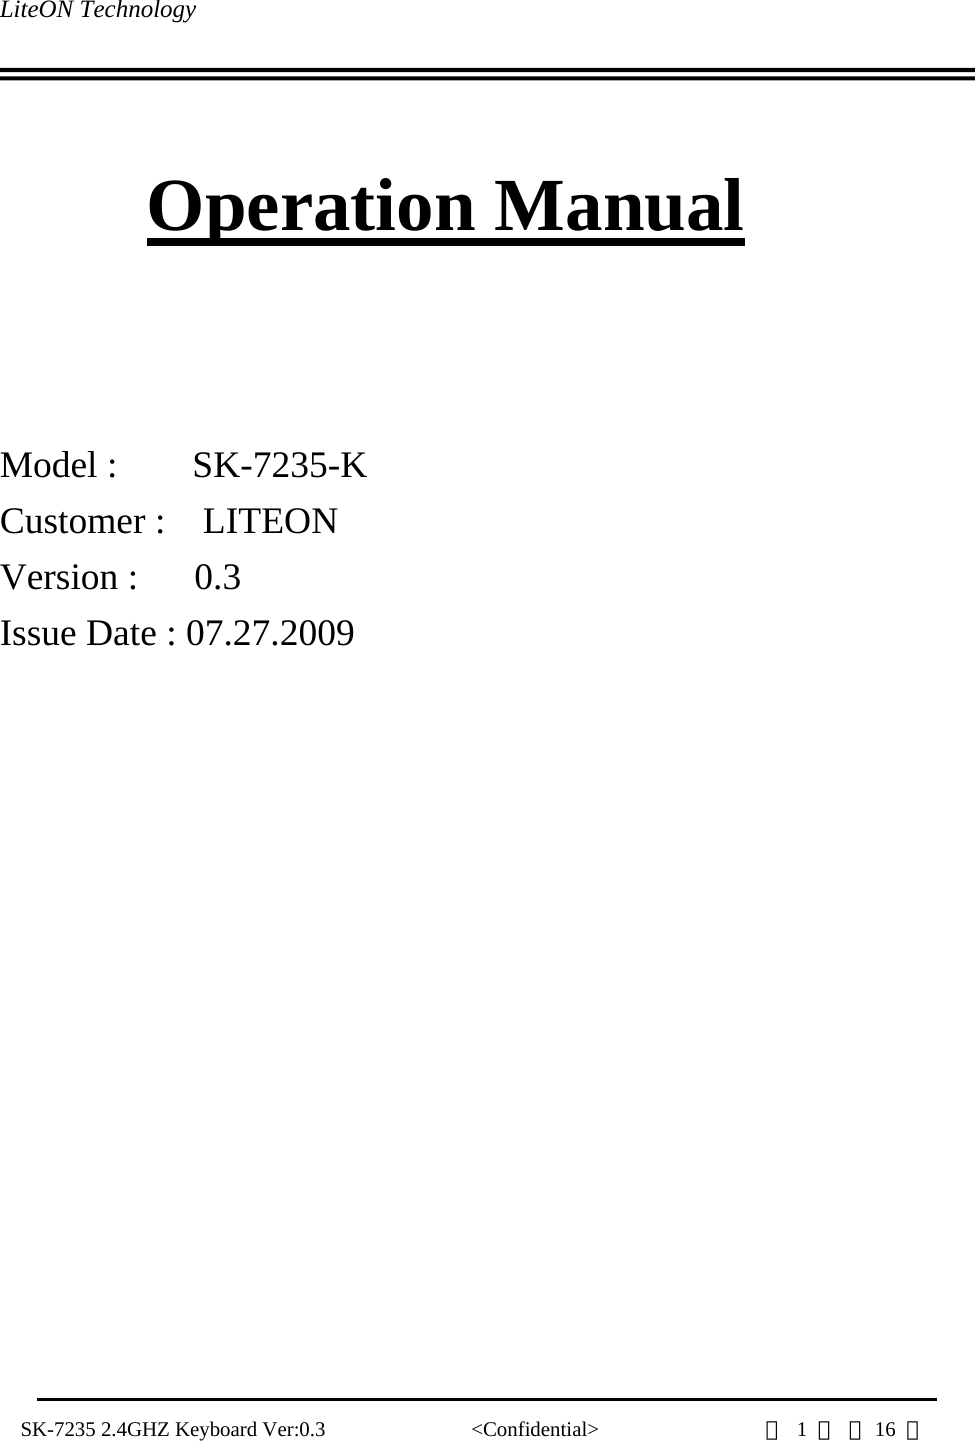 LiteON Technology                                                                                   SK-7235 2.4GHZ Keyboard Ver:0.3              &lt;Confidential&gt;                第 1 頁 共16  頁                  Operation Manual     Model :    SK-7235-K Customer :  LITEON Version :   0.3 Issue Date : 07.27.2009         